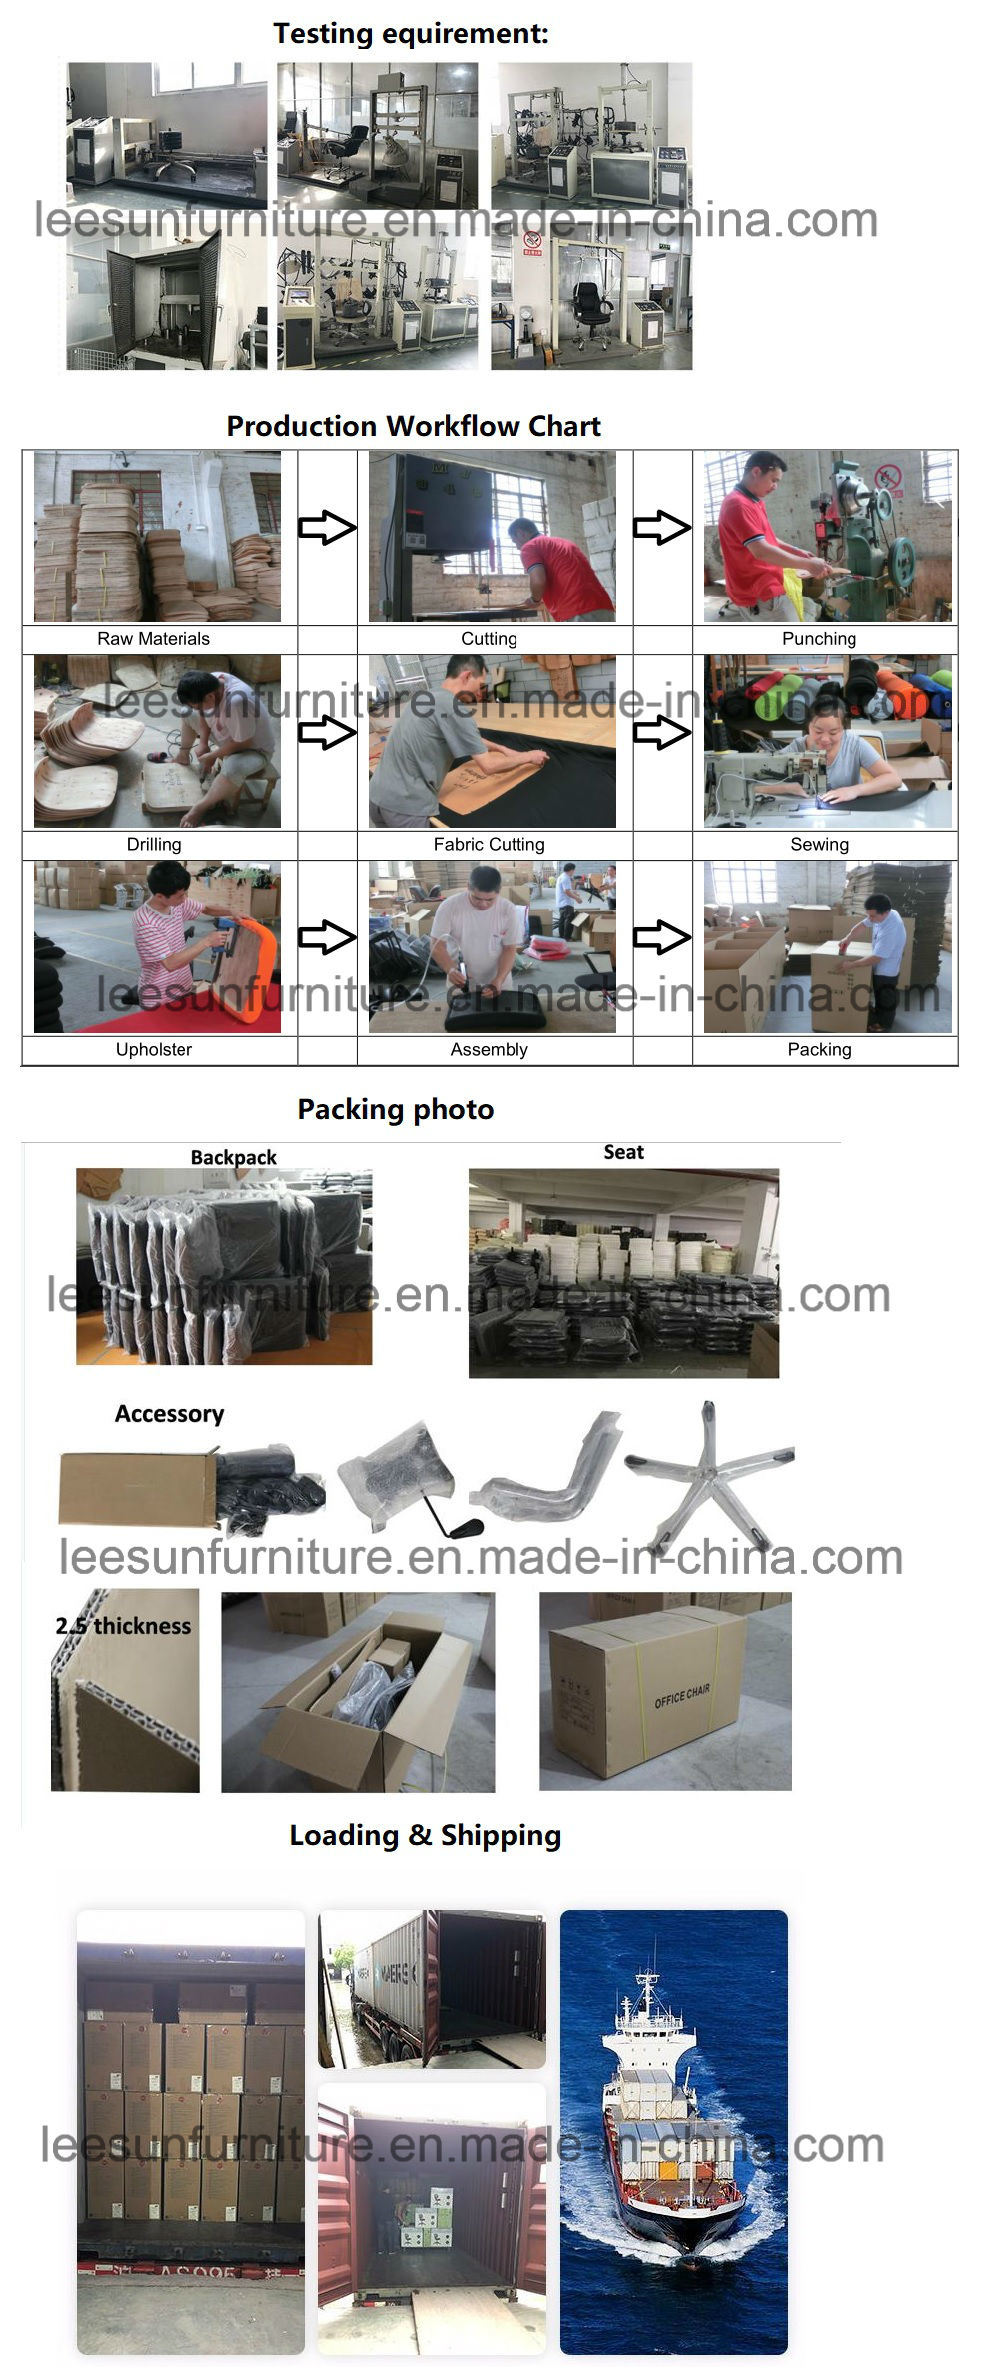 Ergonomic MID Back Office Desk Computer Mesh Chair with Armrest (LSM-M203WH)